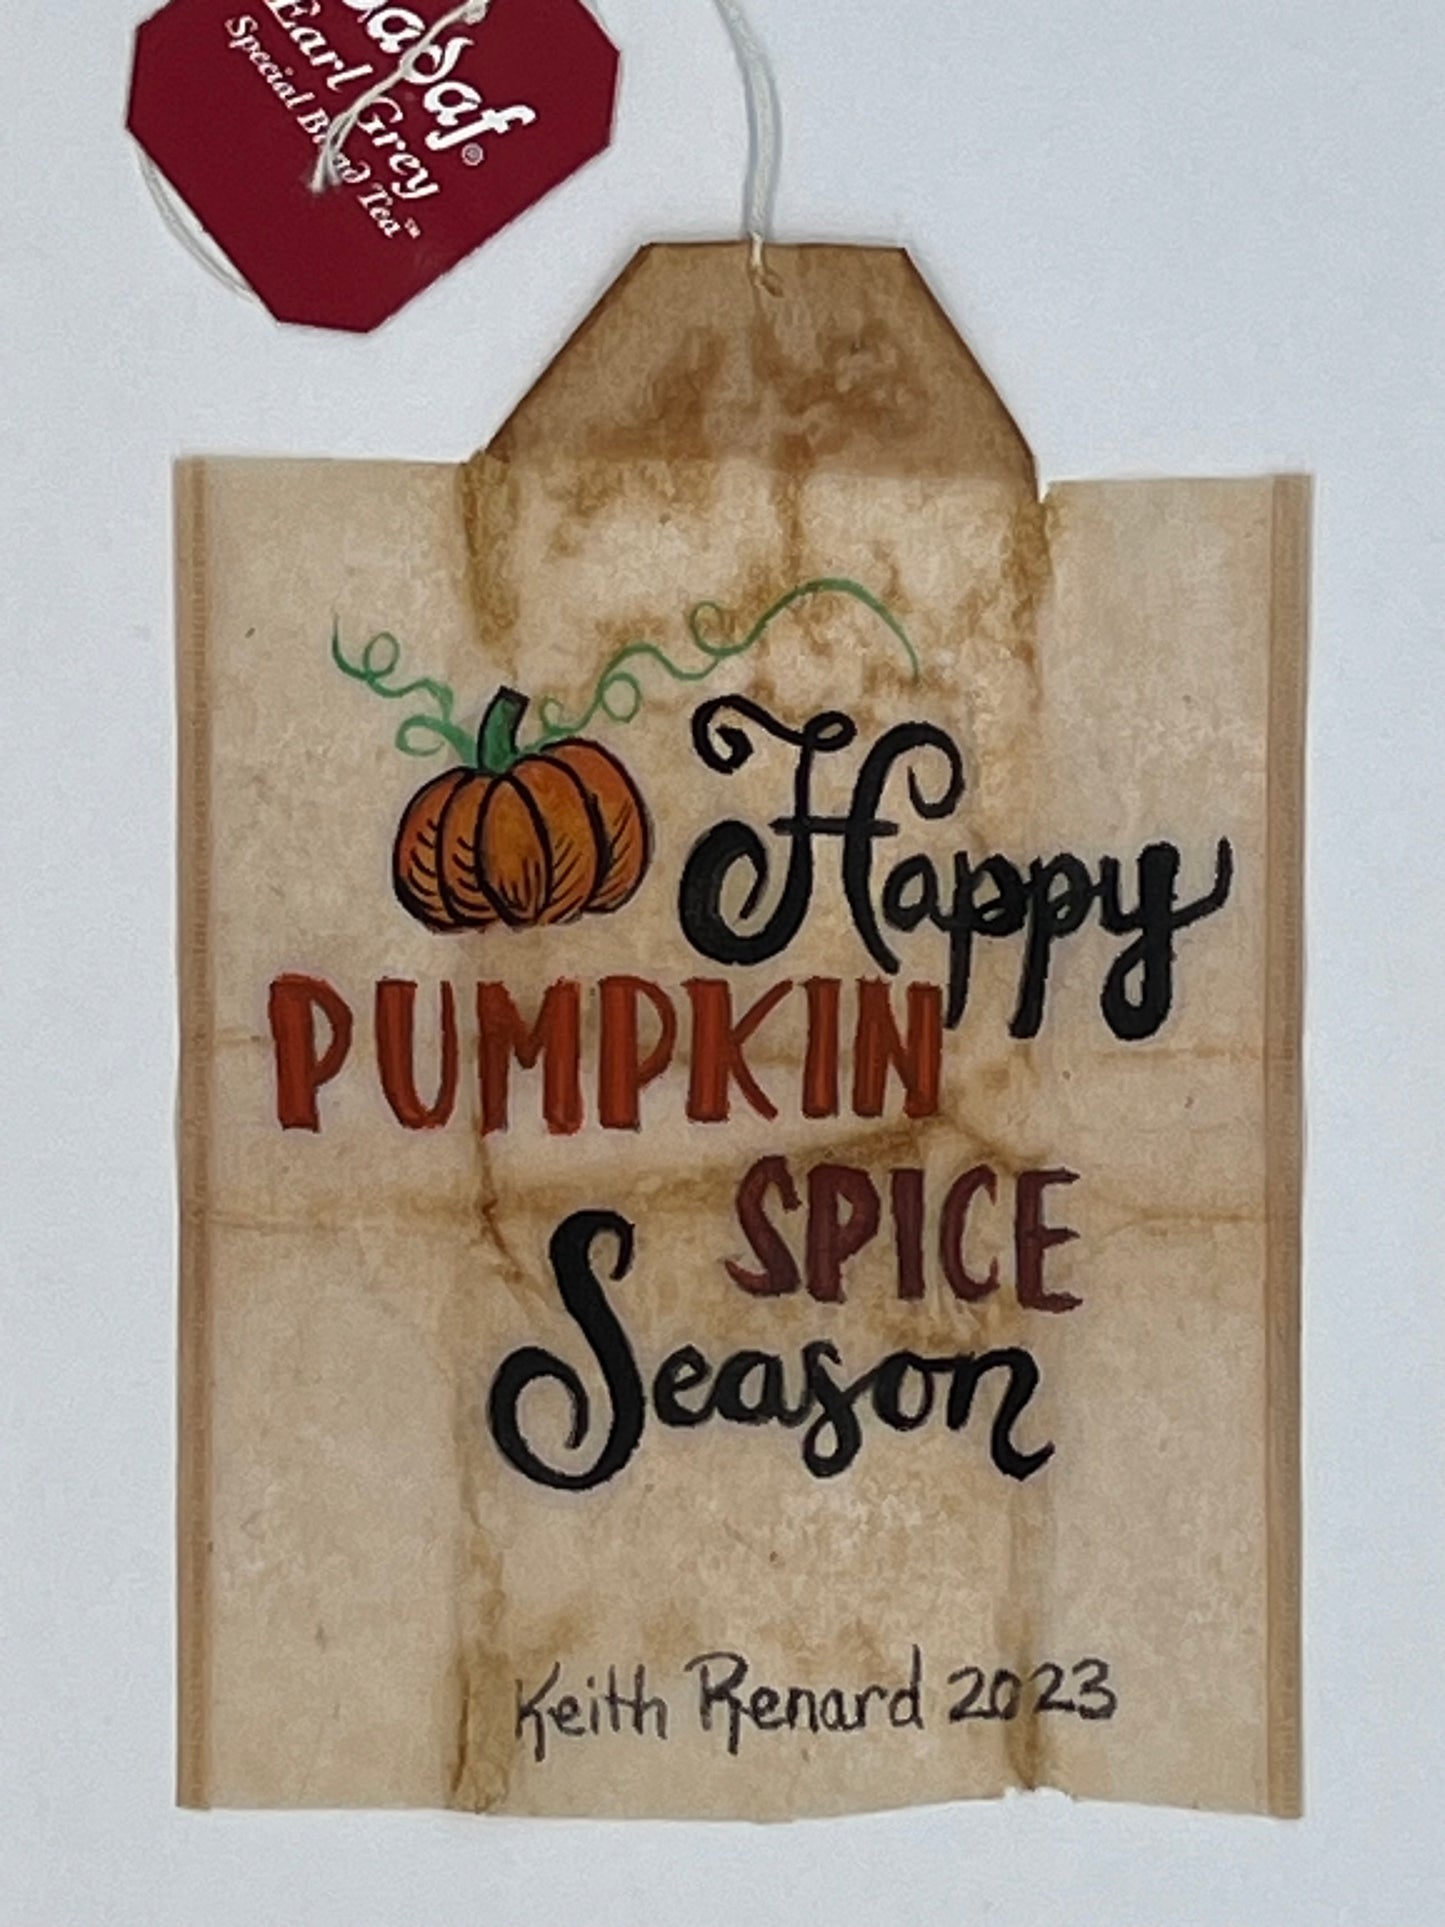 Happy Pumpkin spice season